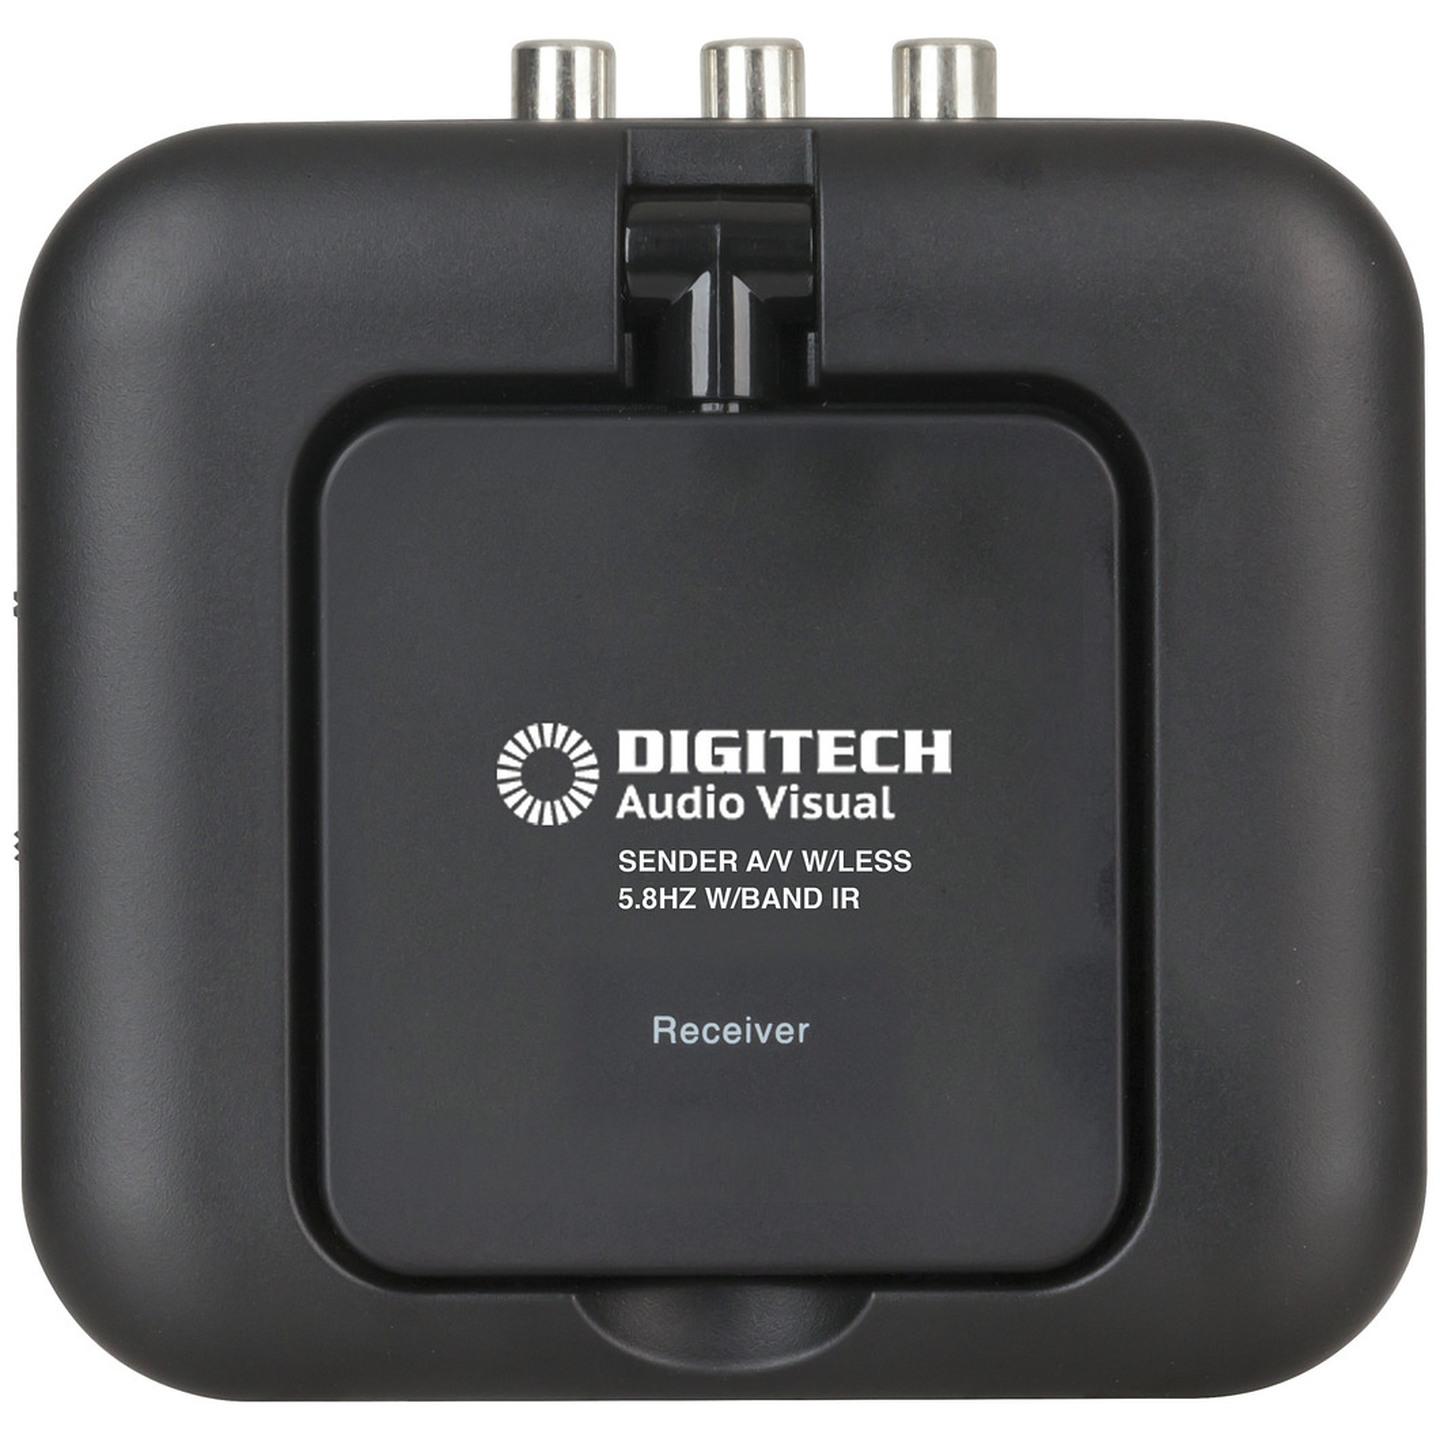 Digitech 5.8GHz Wireless AV Sender/Receiver with Wideband IR Extender